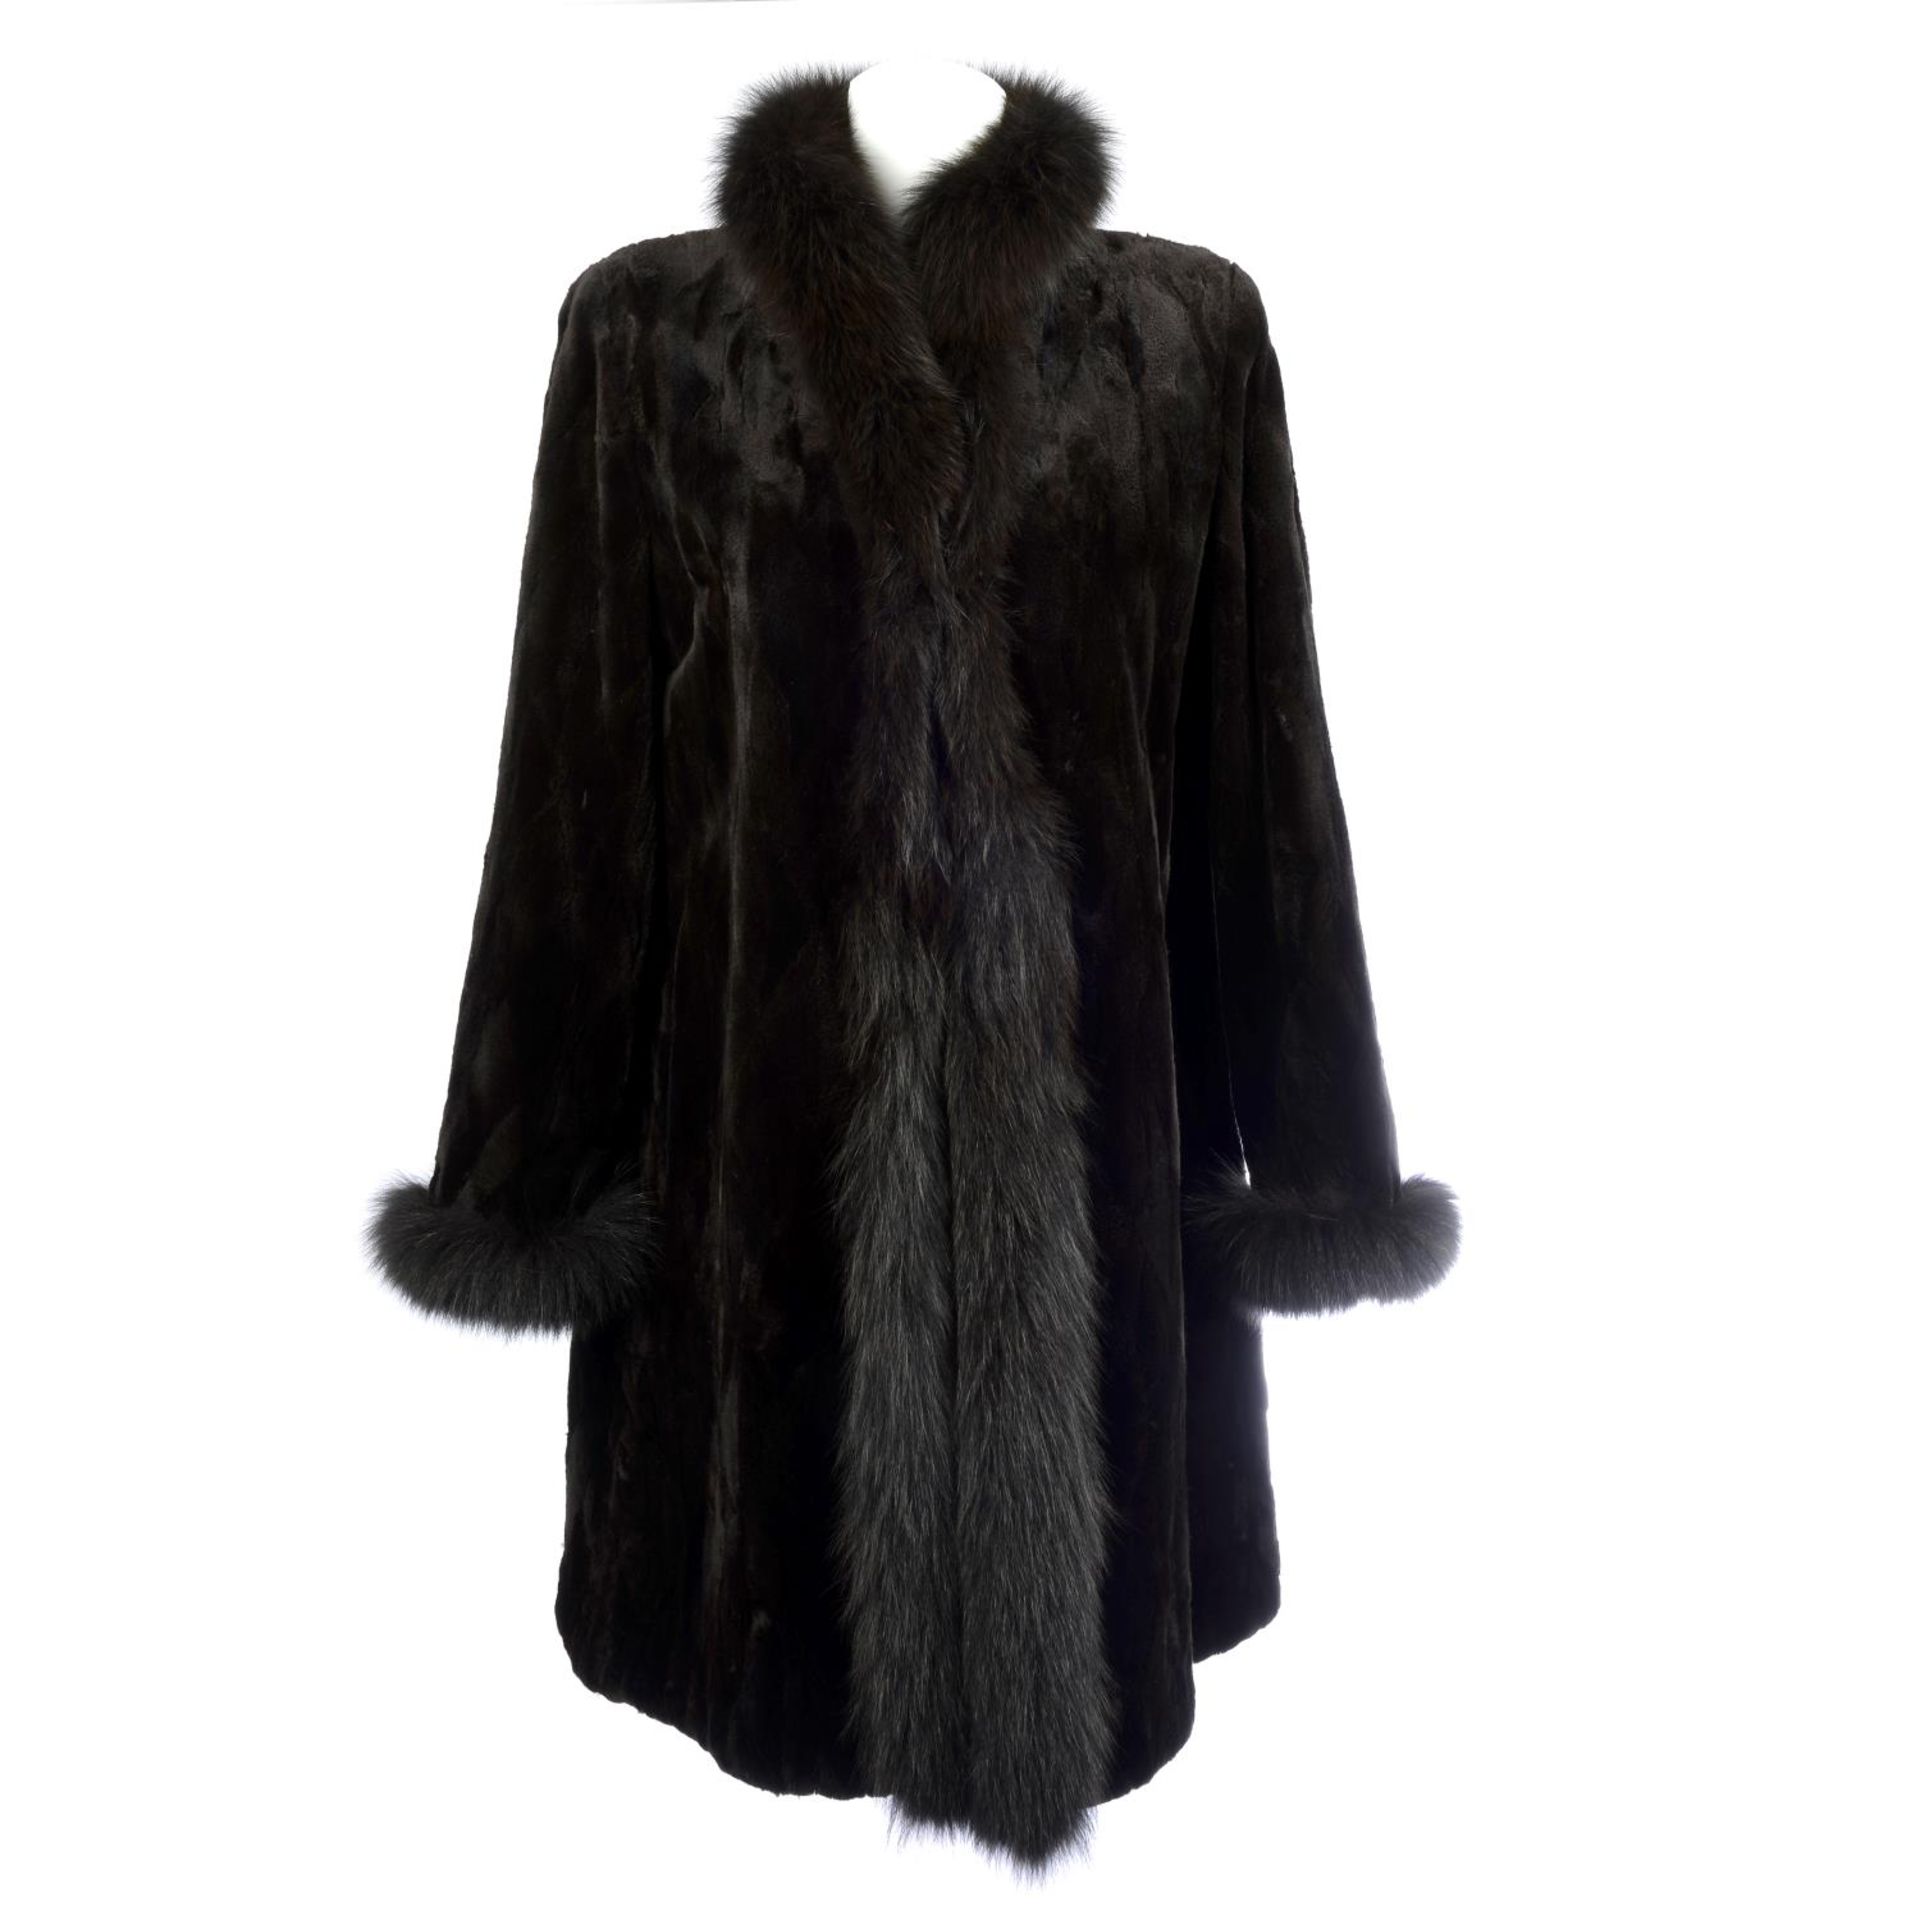 A reversible sheared mink coat with fox fur trim.